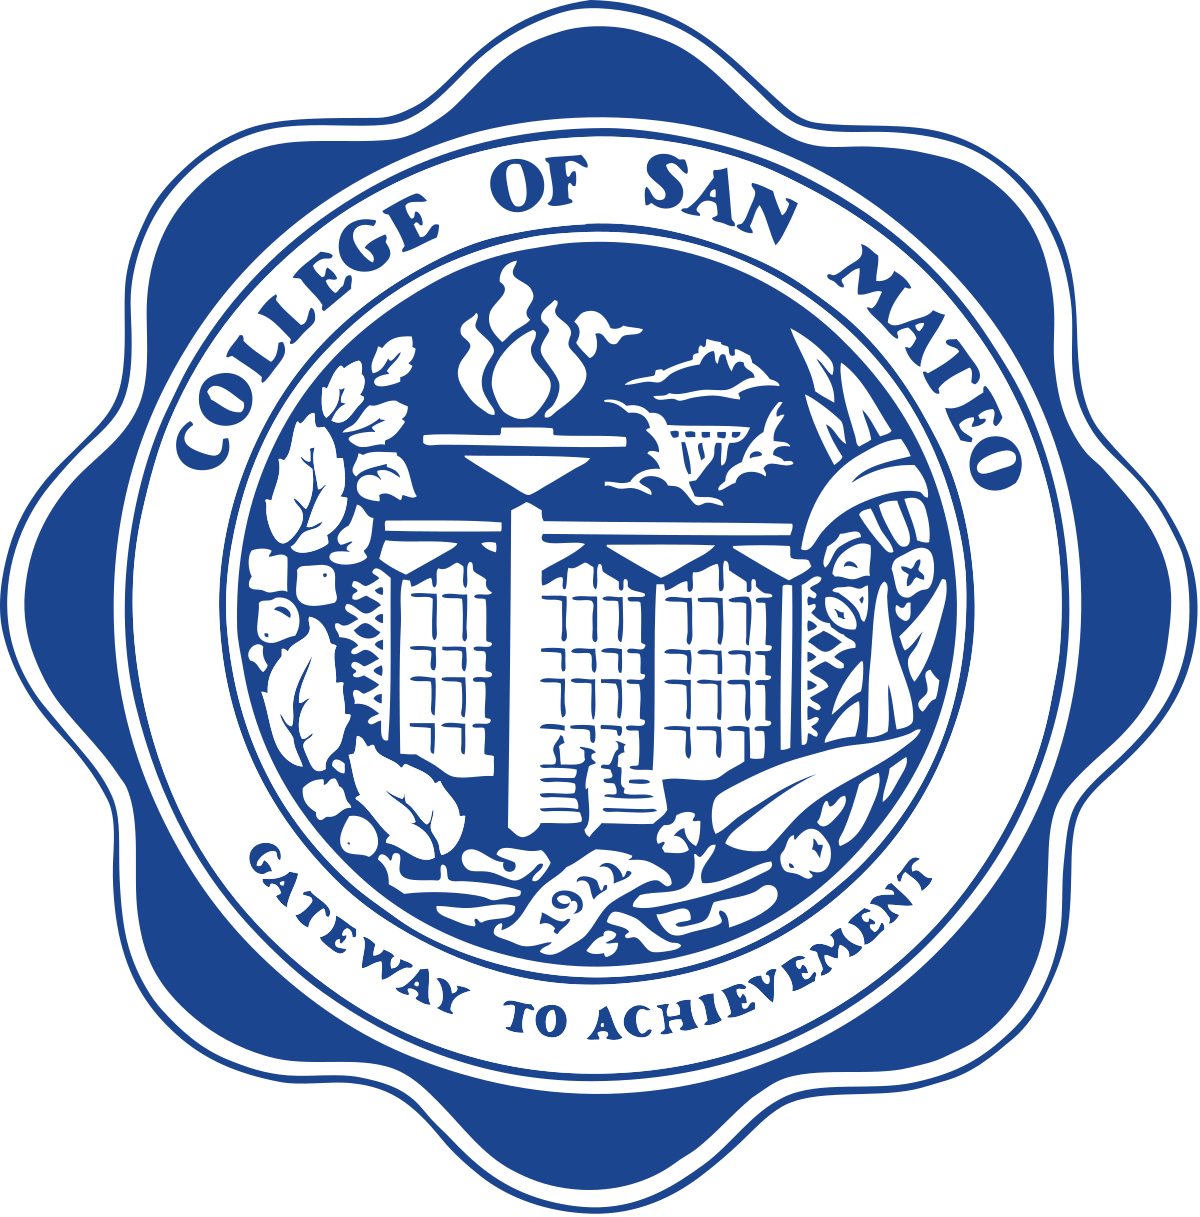 College of San Mateo